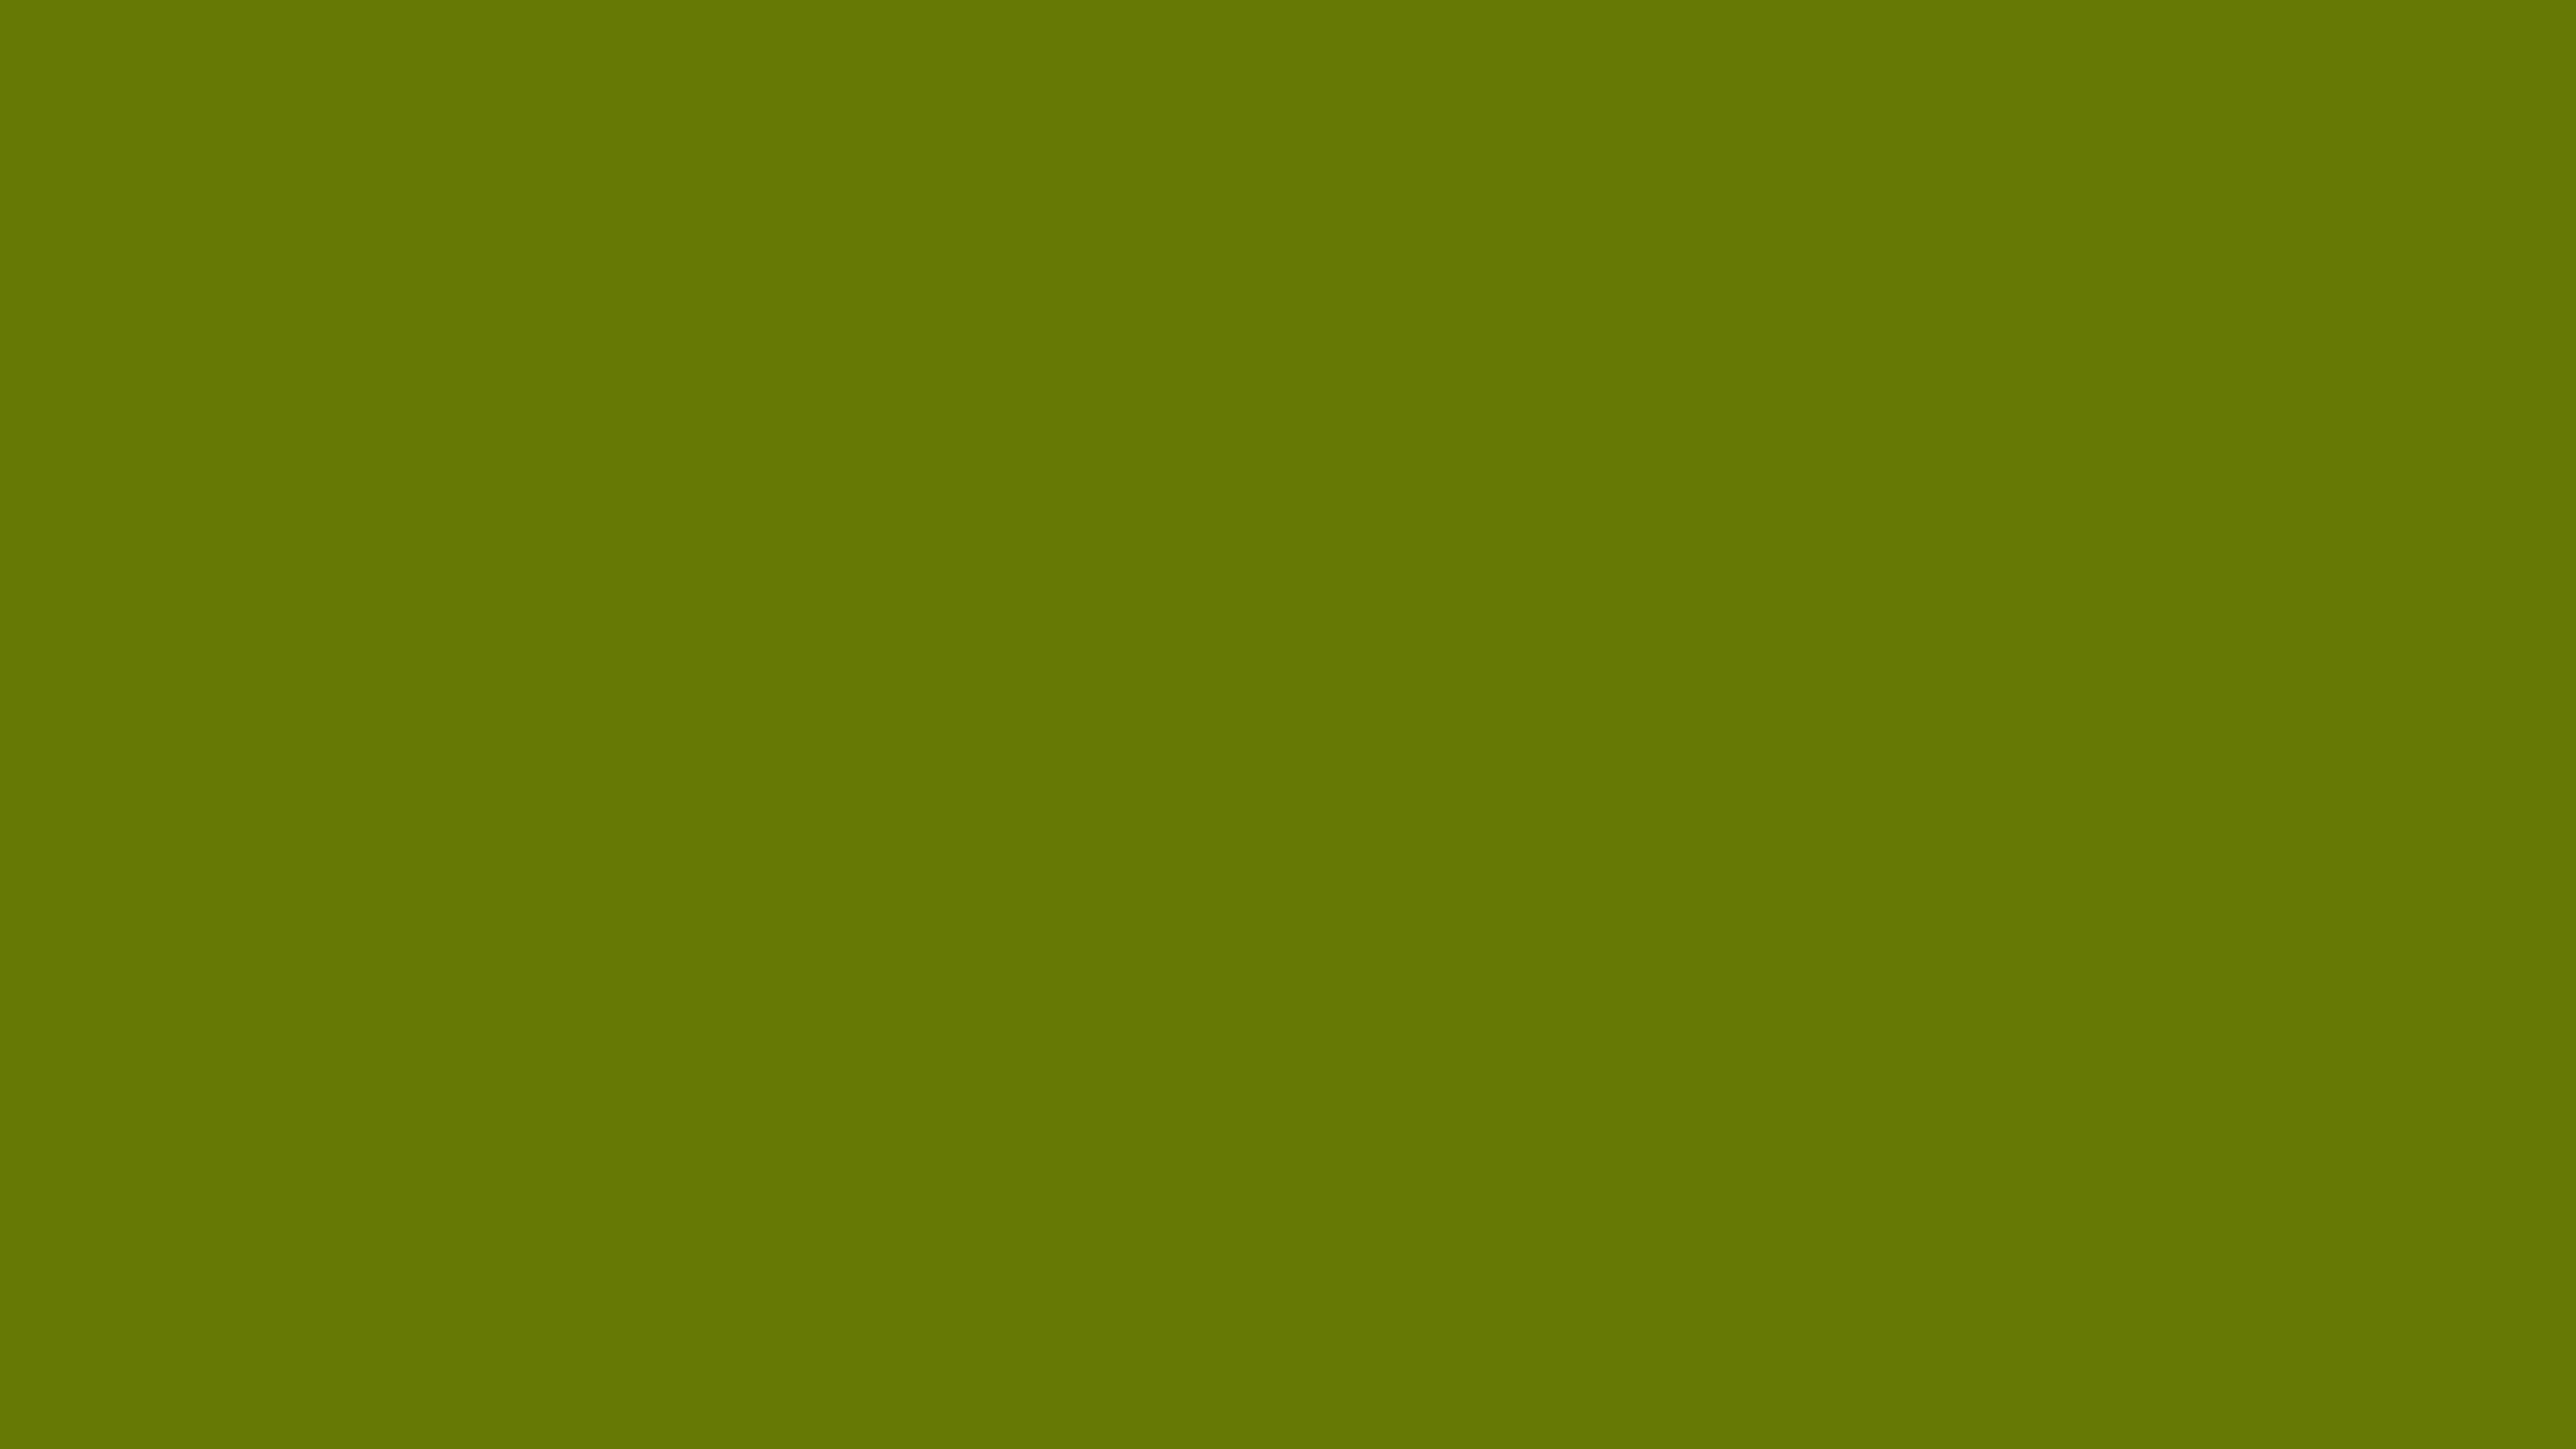 Olive Green Solid Color Background Image | Free Image Generator